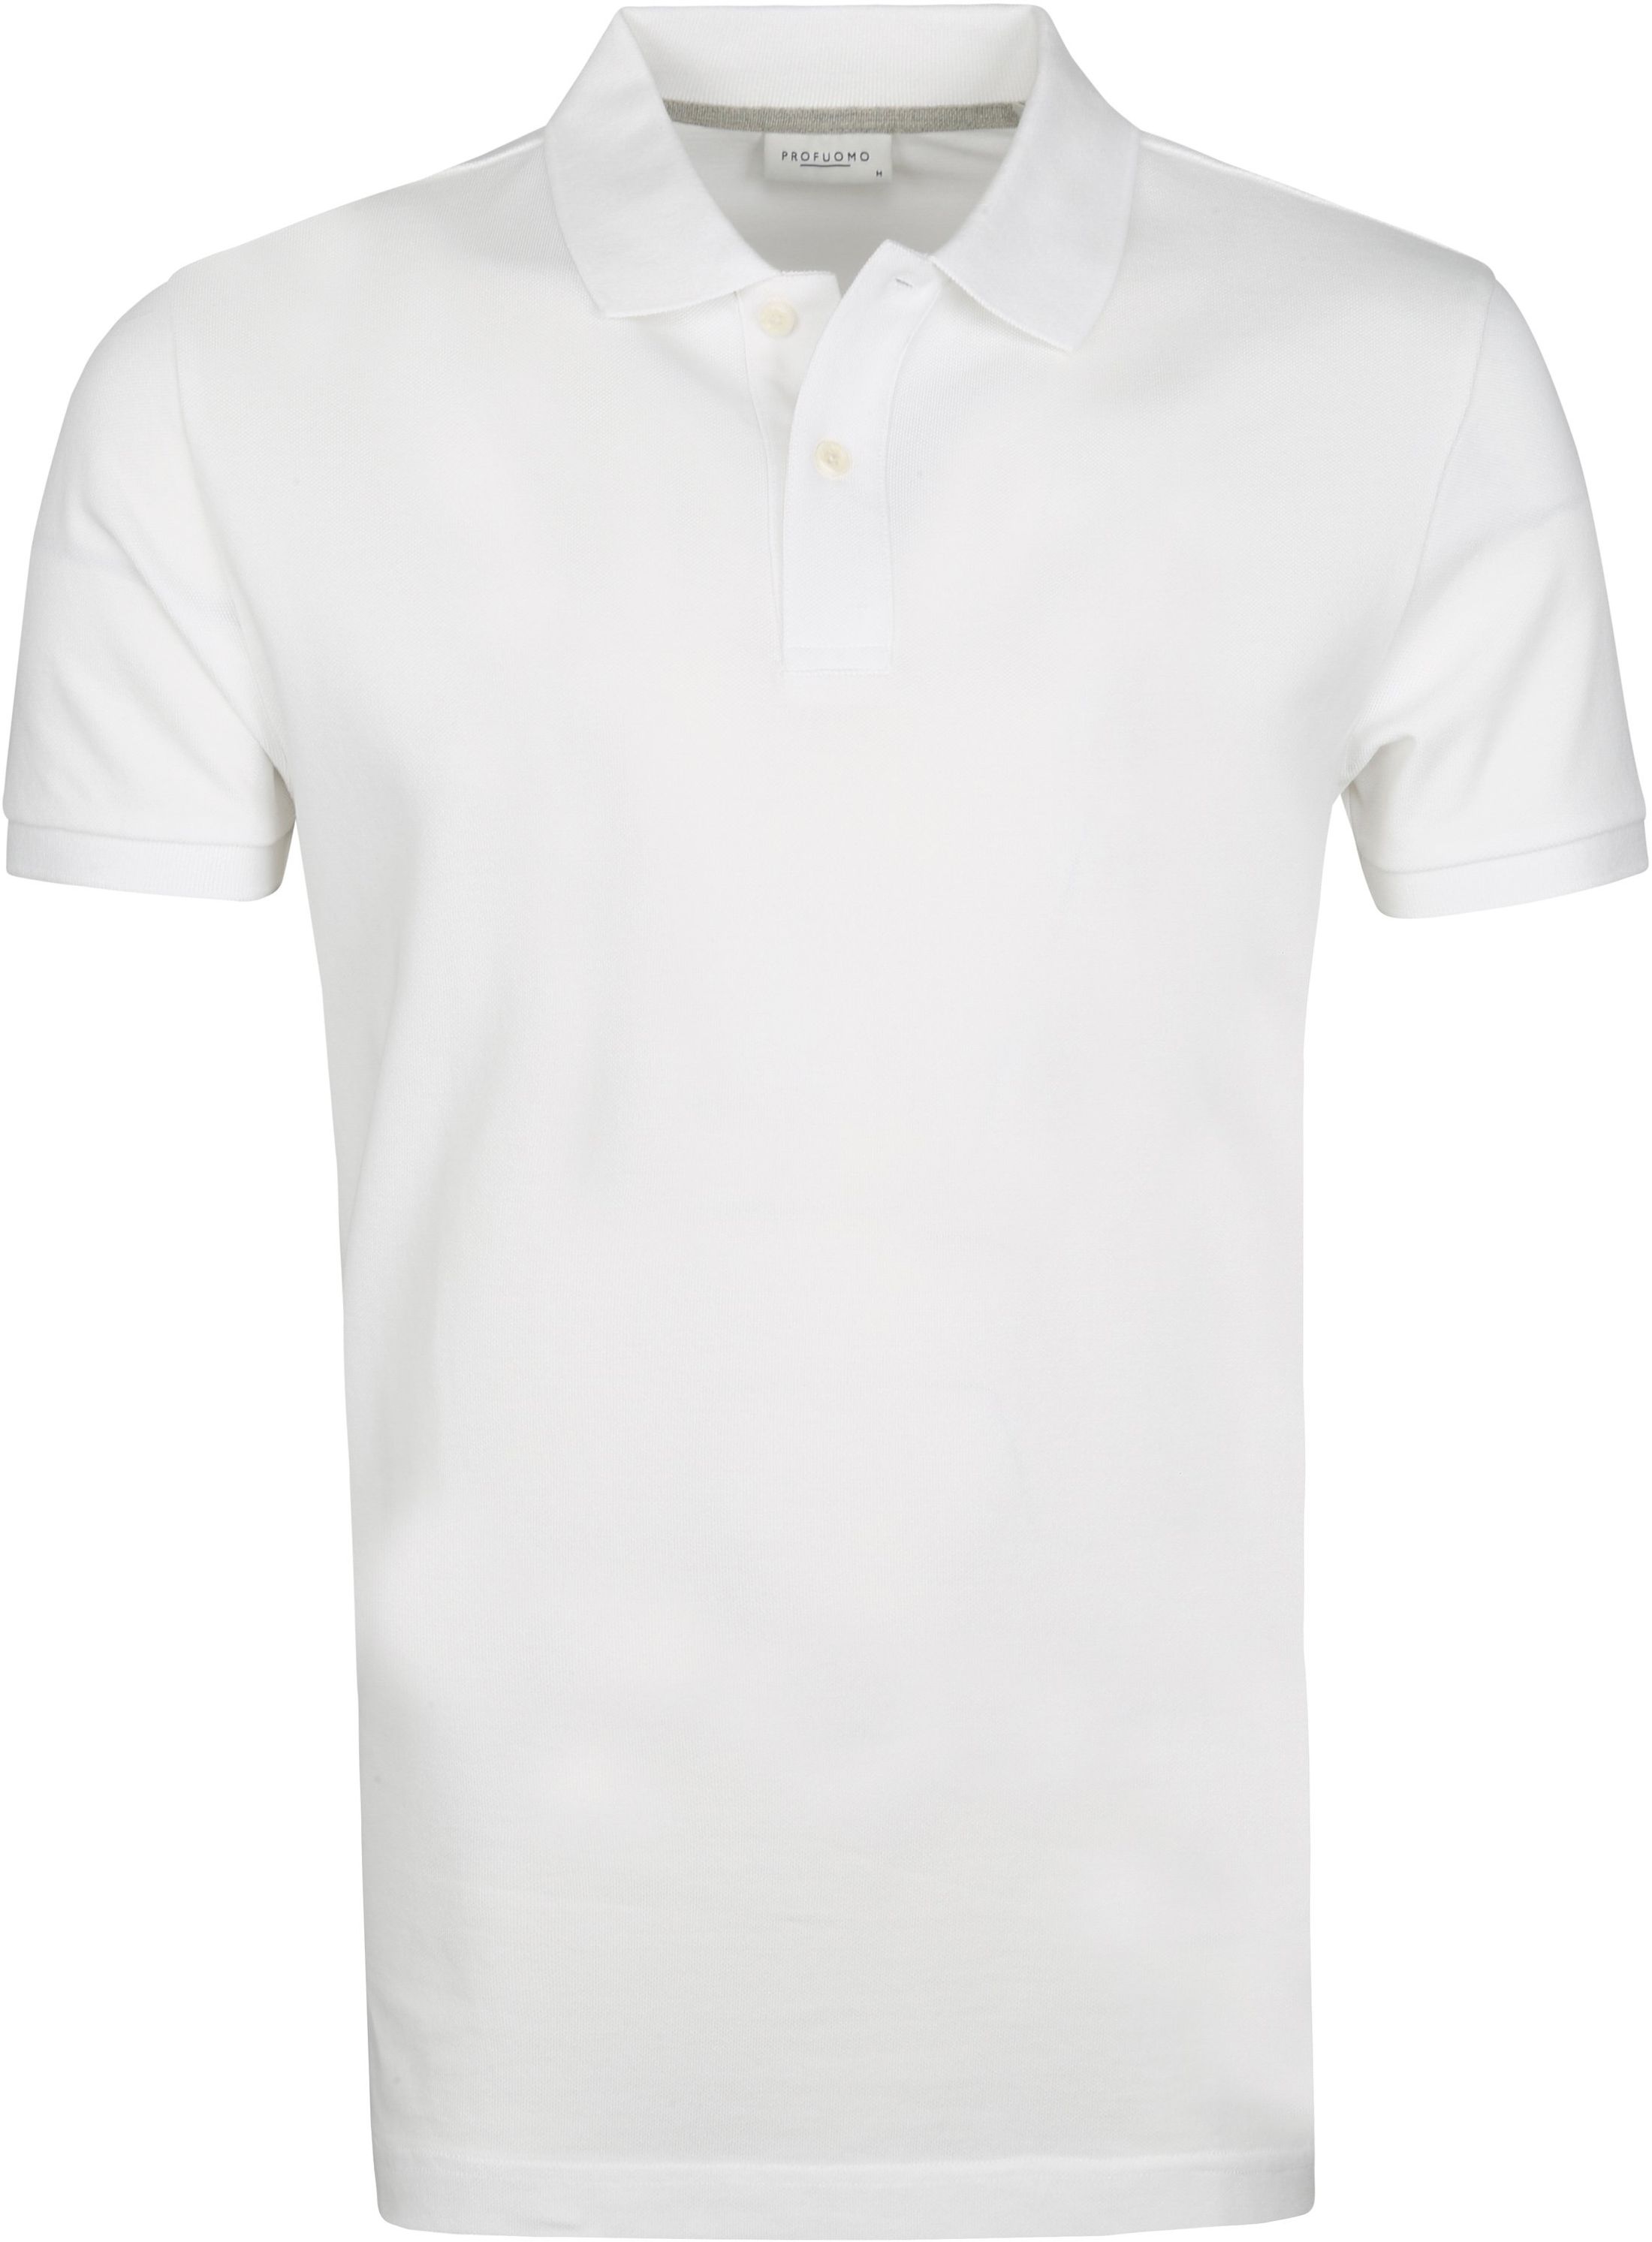 Profuomo Pique Polo Shirt White size L